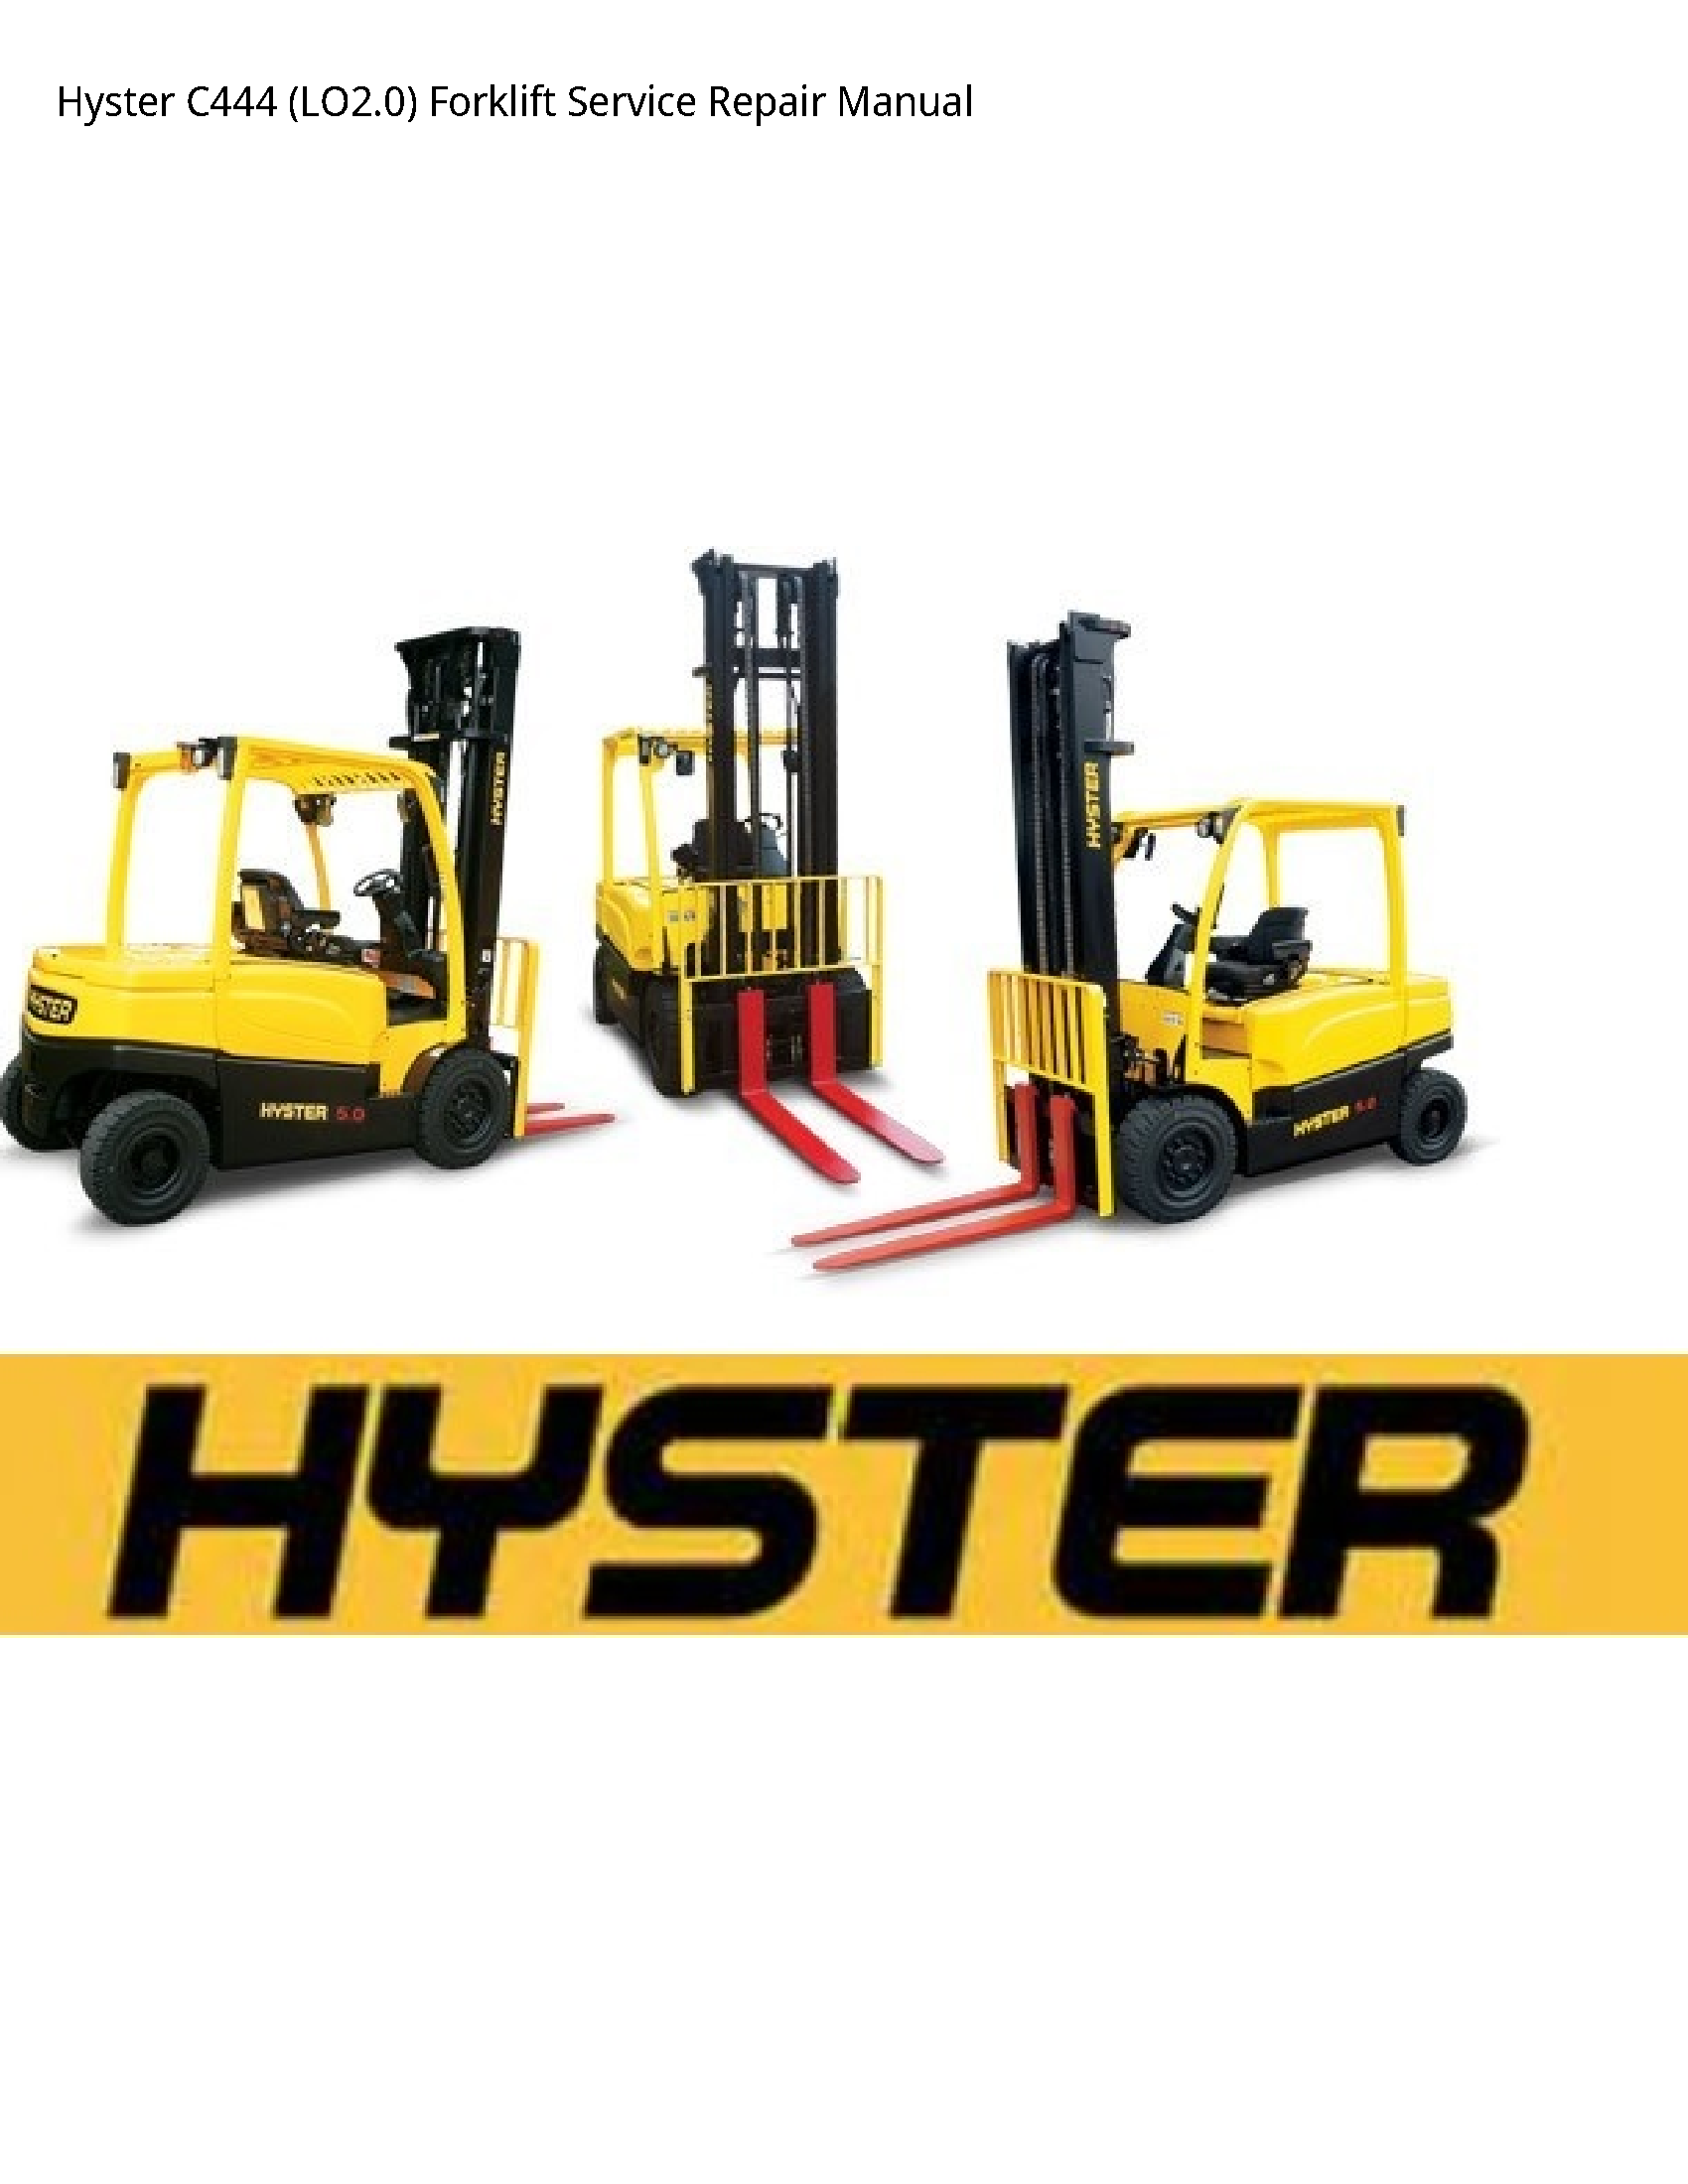 Hyster C444 Forklift manual